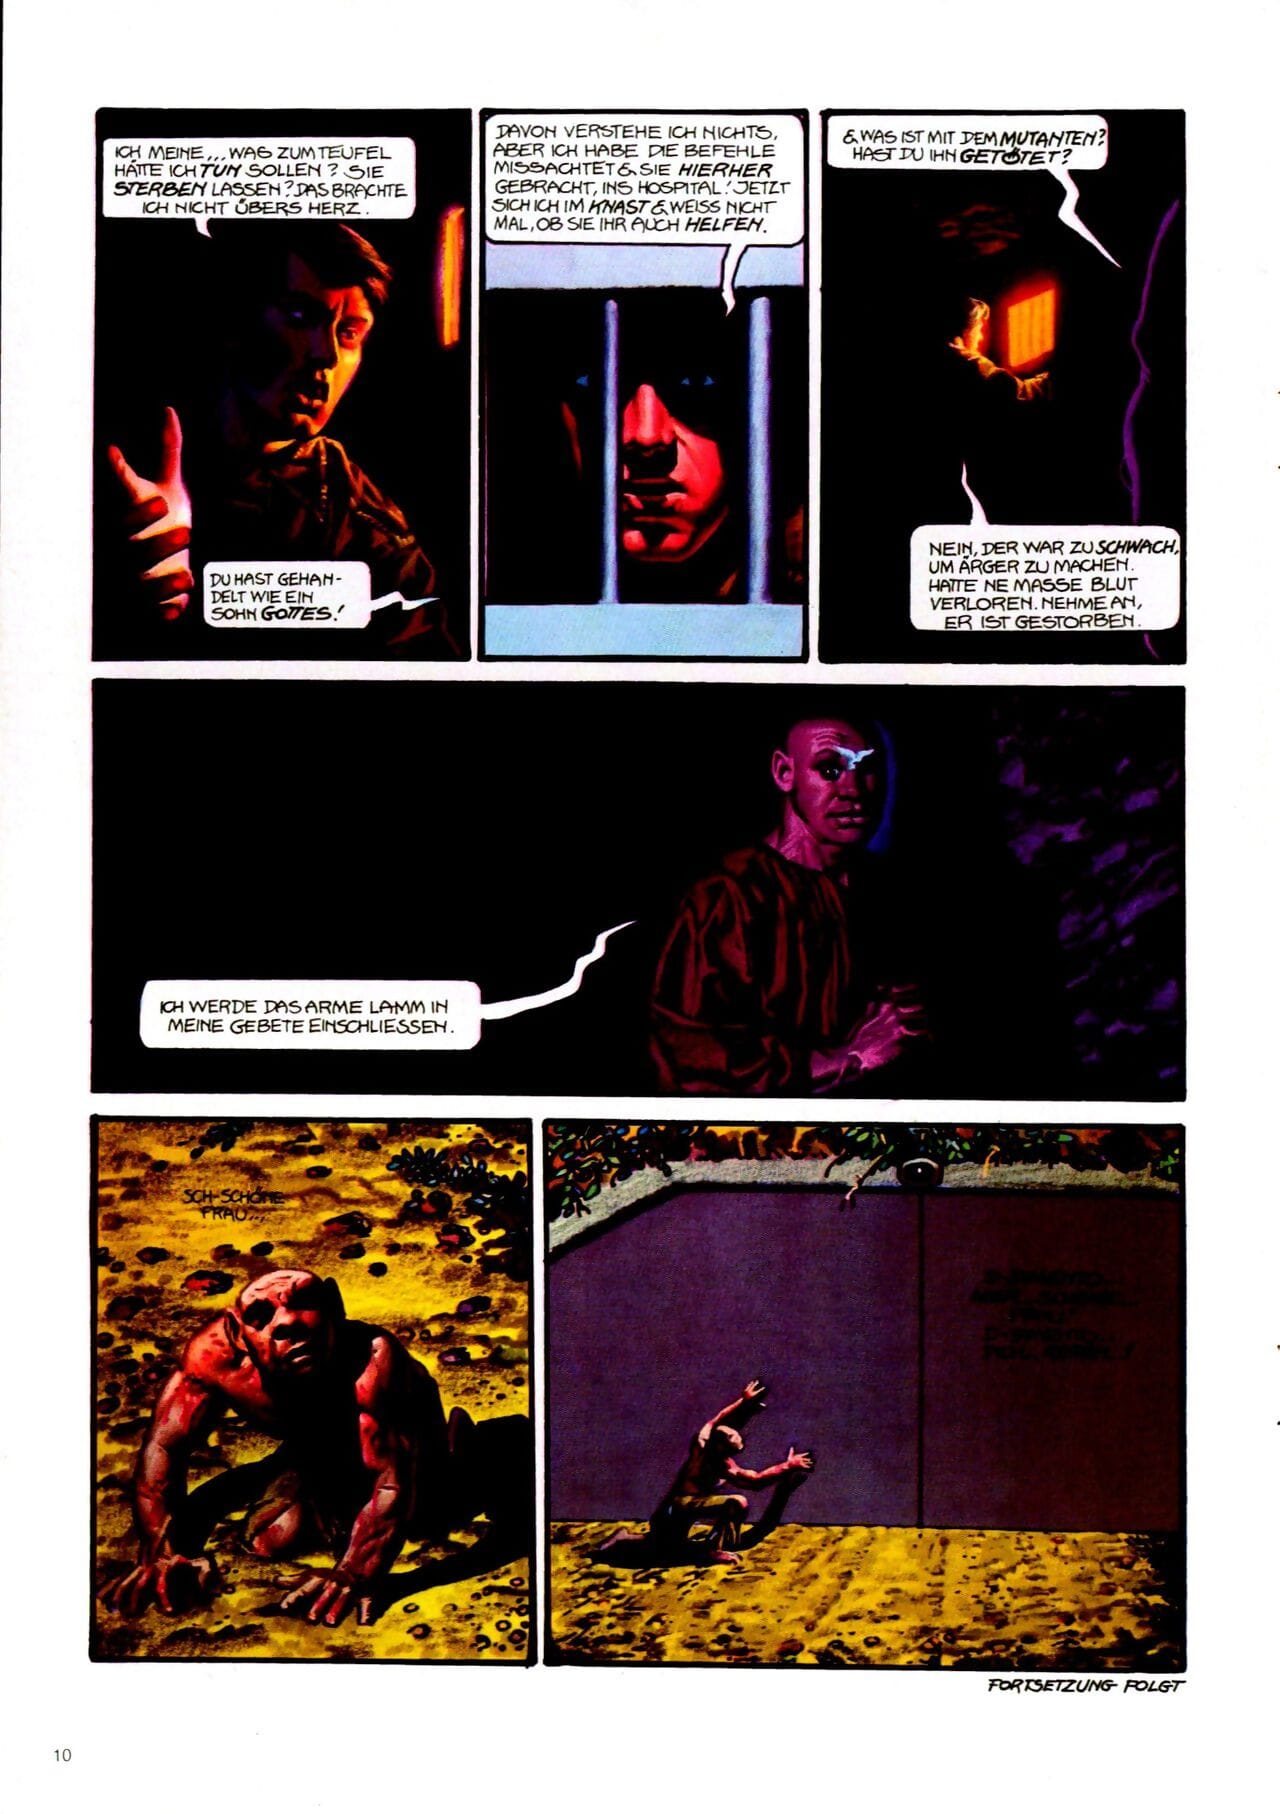 Schwermetall #013 page 1